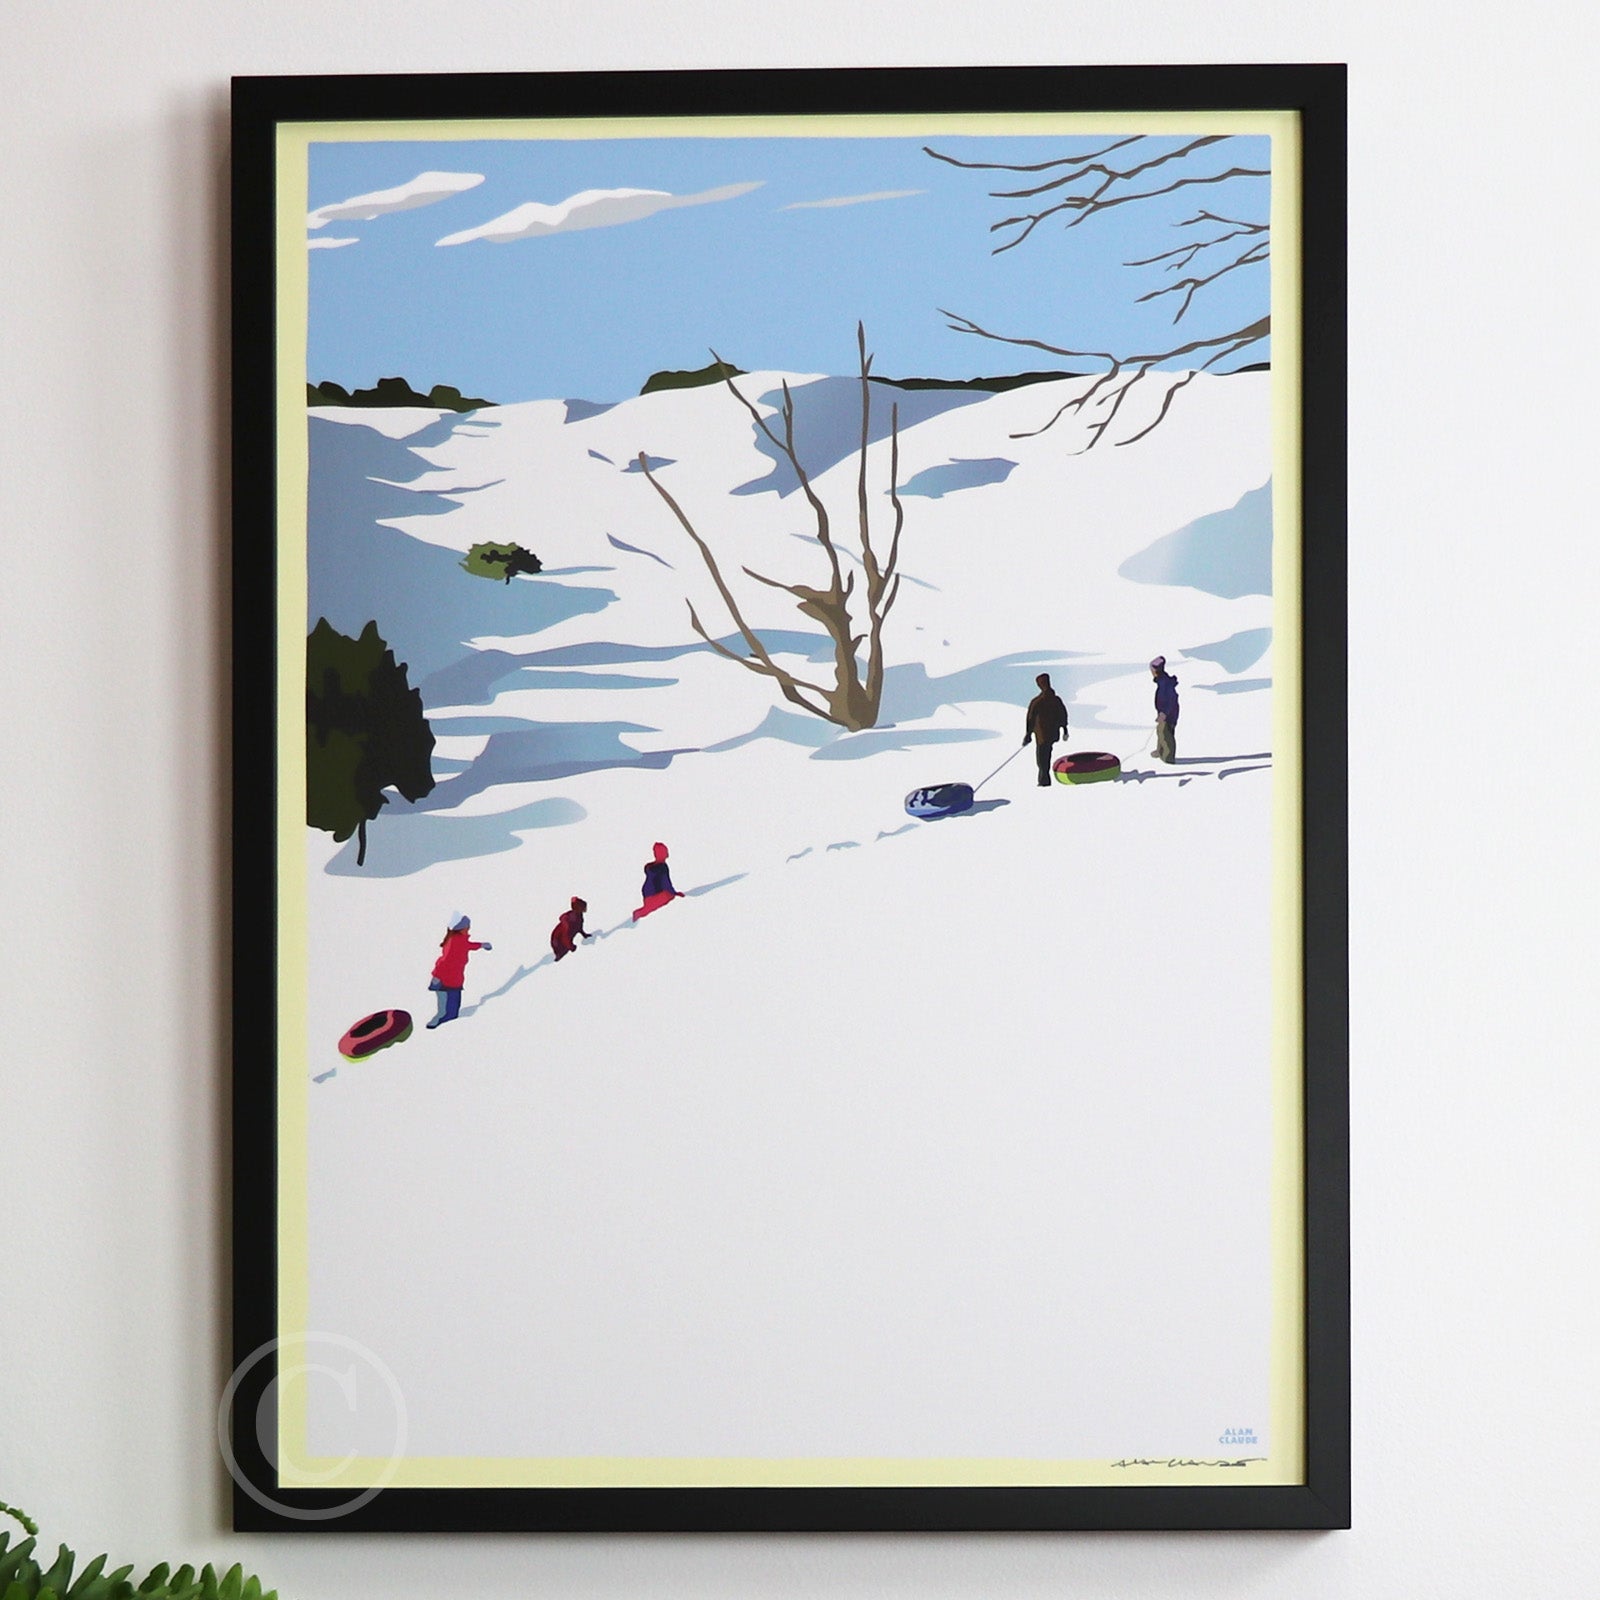 Snow Kids Art Print 18" x 24" Framed Wall Poster By Alan Claude - Maine